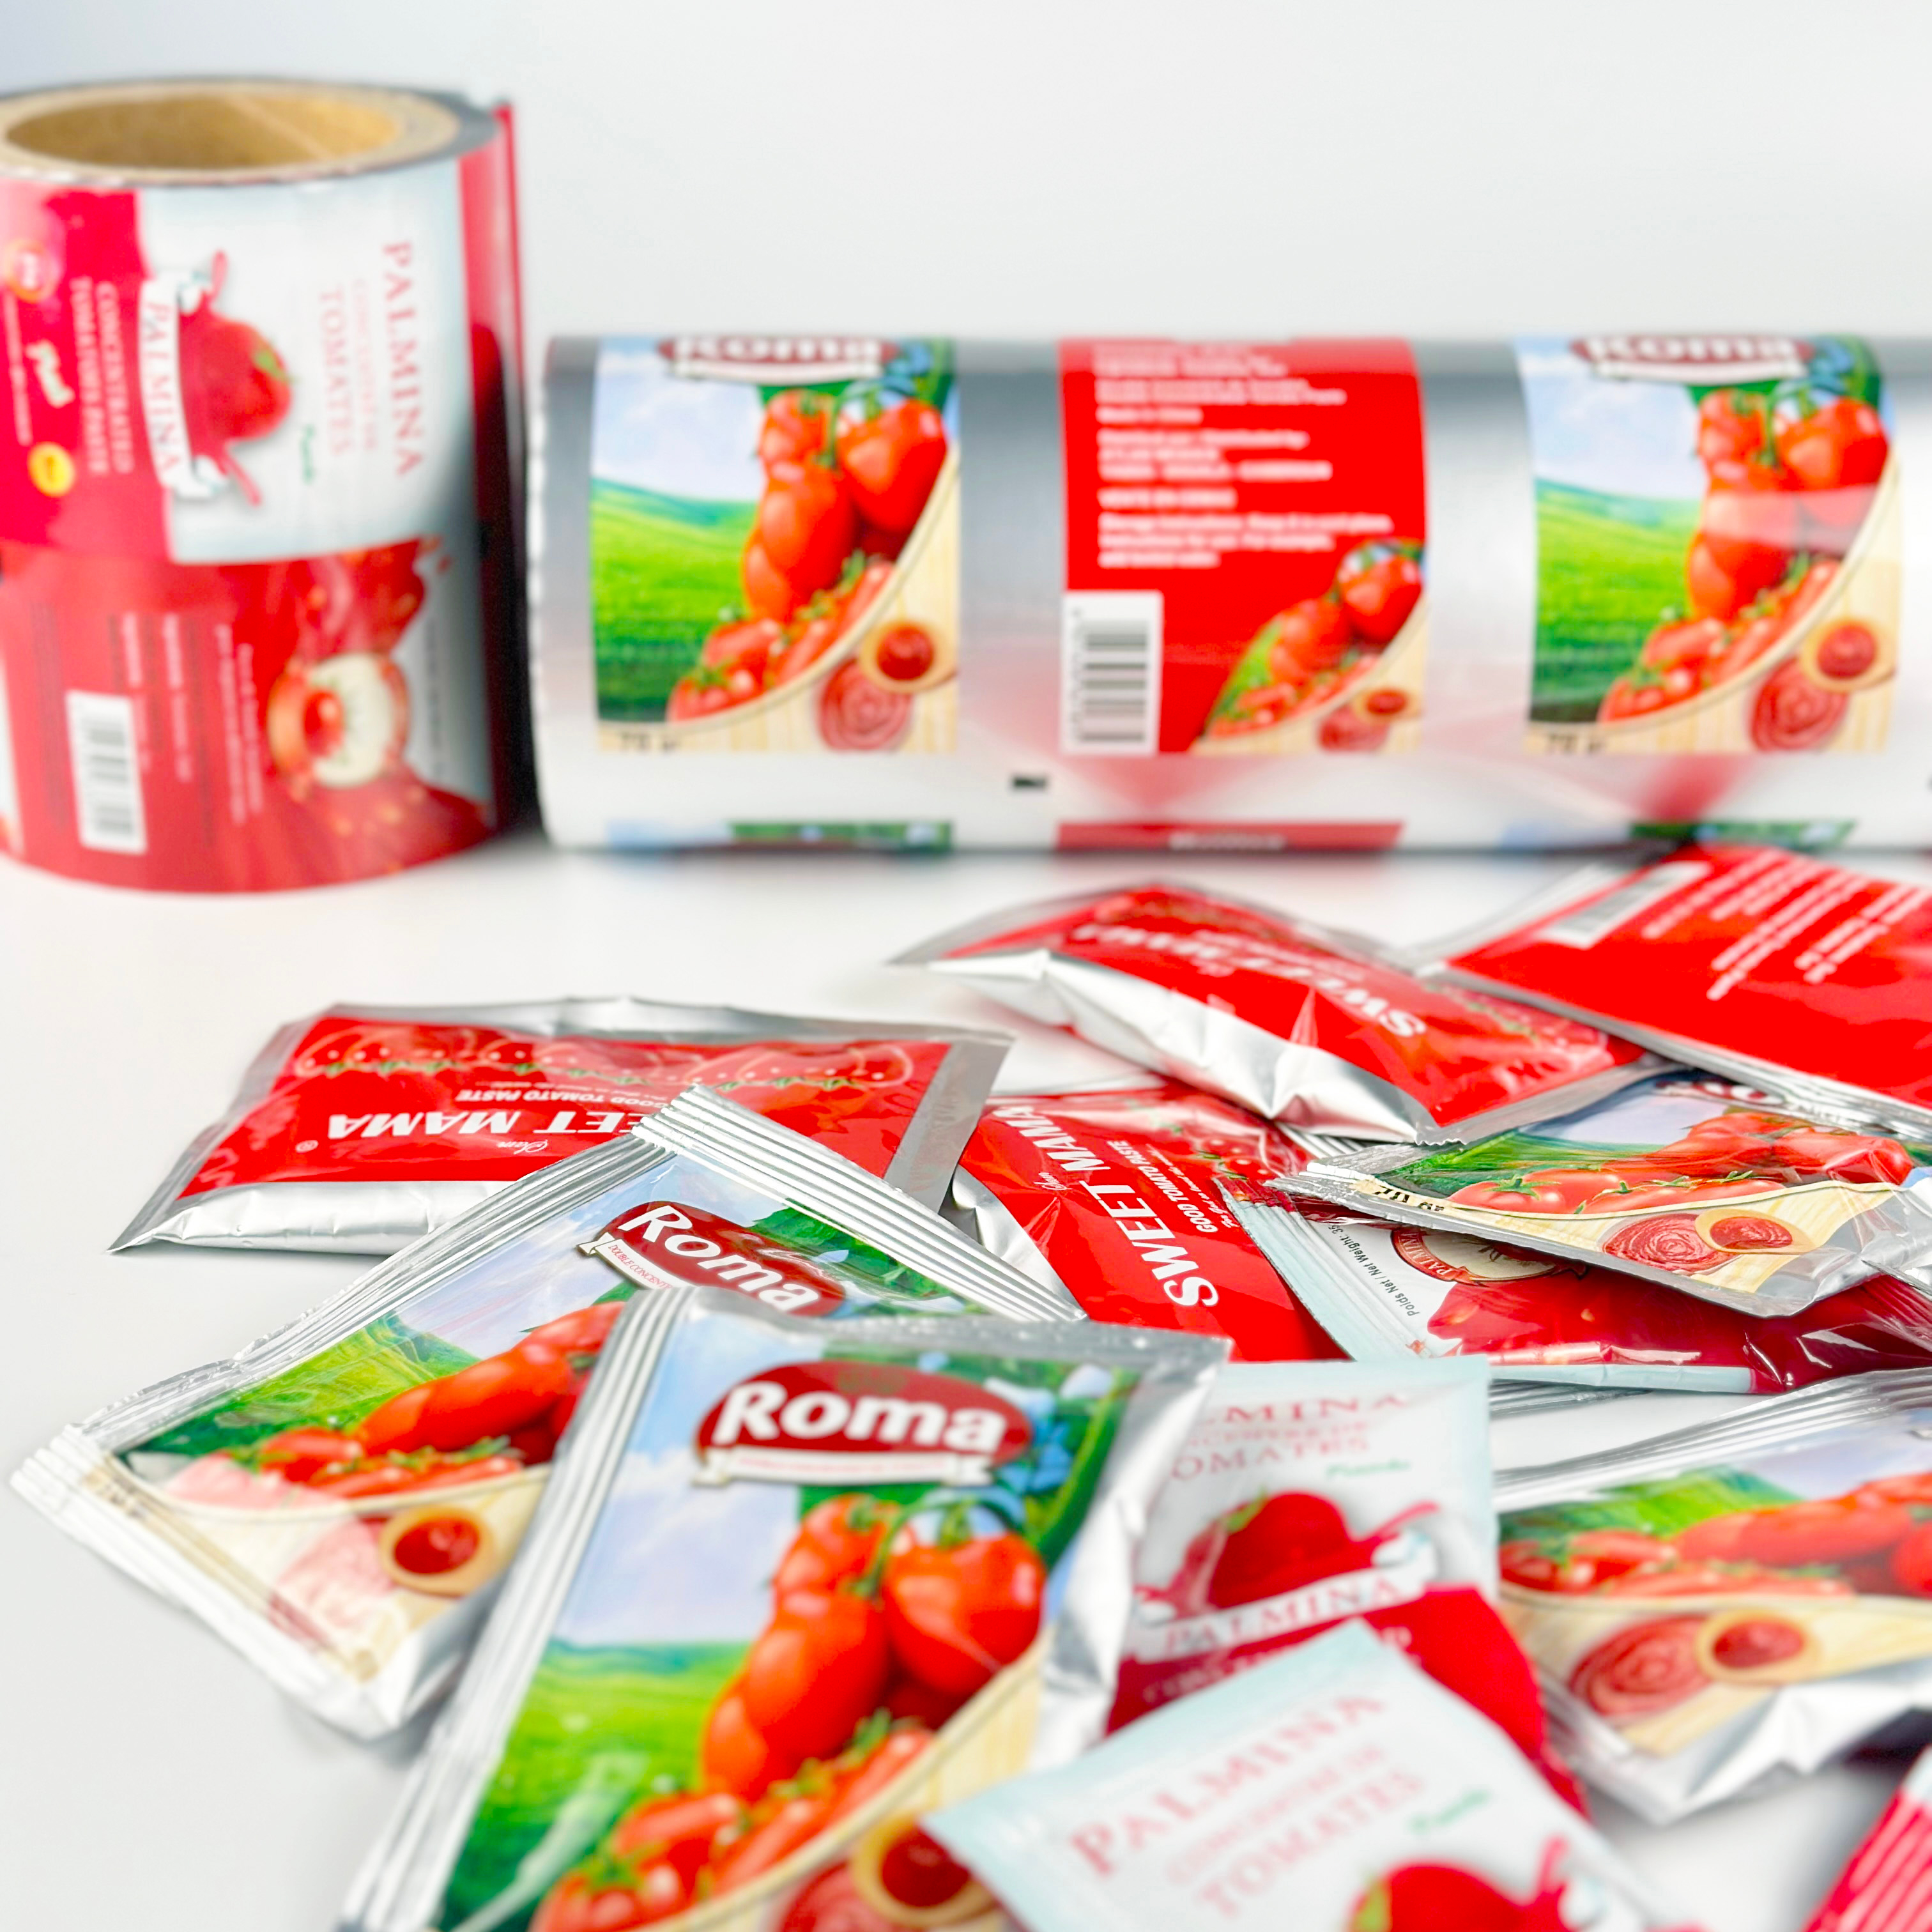 DQ PACK Ketchup Packaging Food Grade Plastic Film in Roll Package